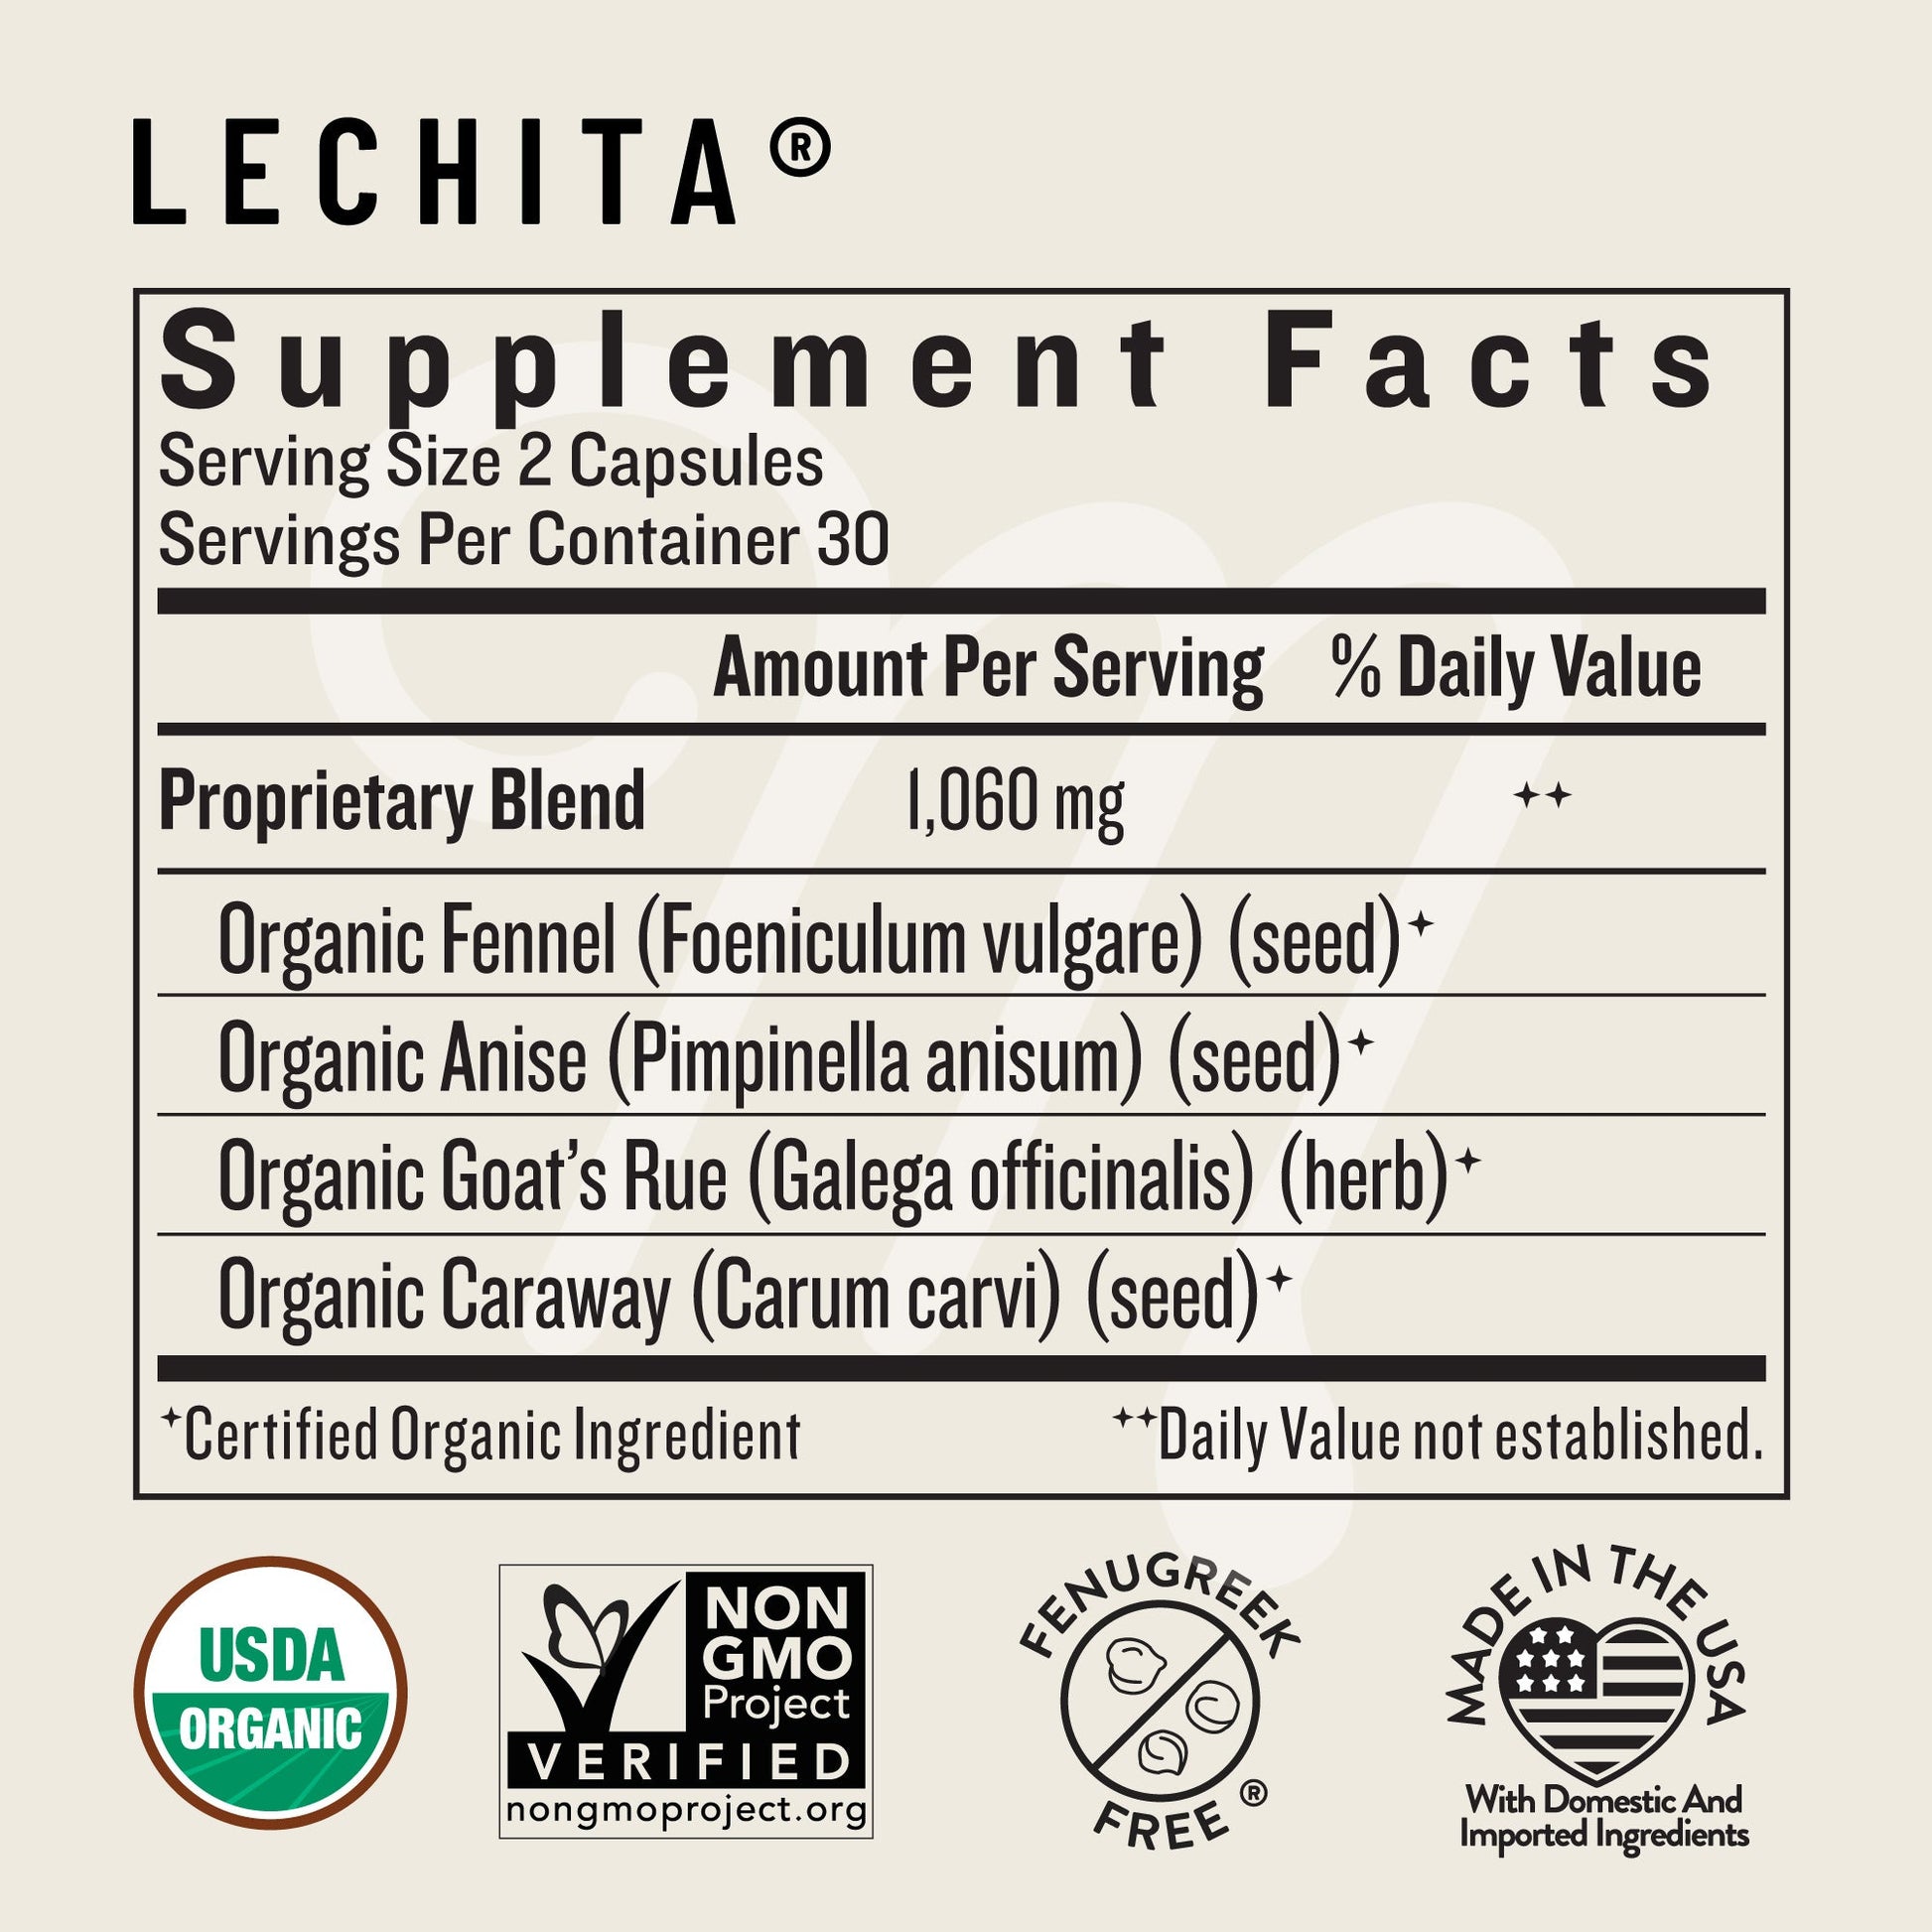 Lechita® - Legendairy Milk